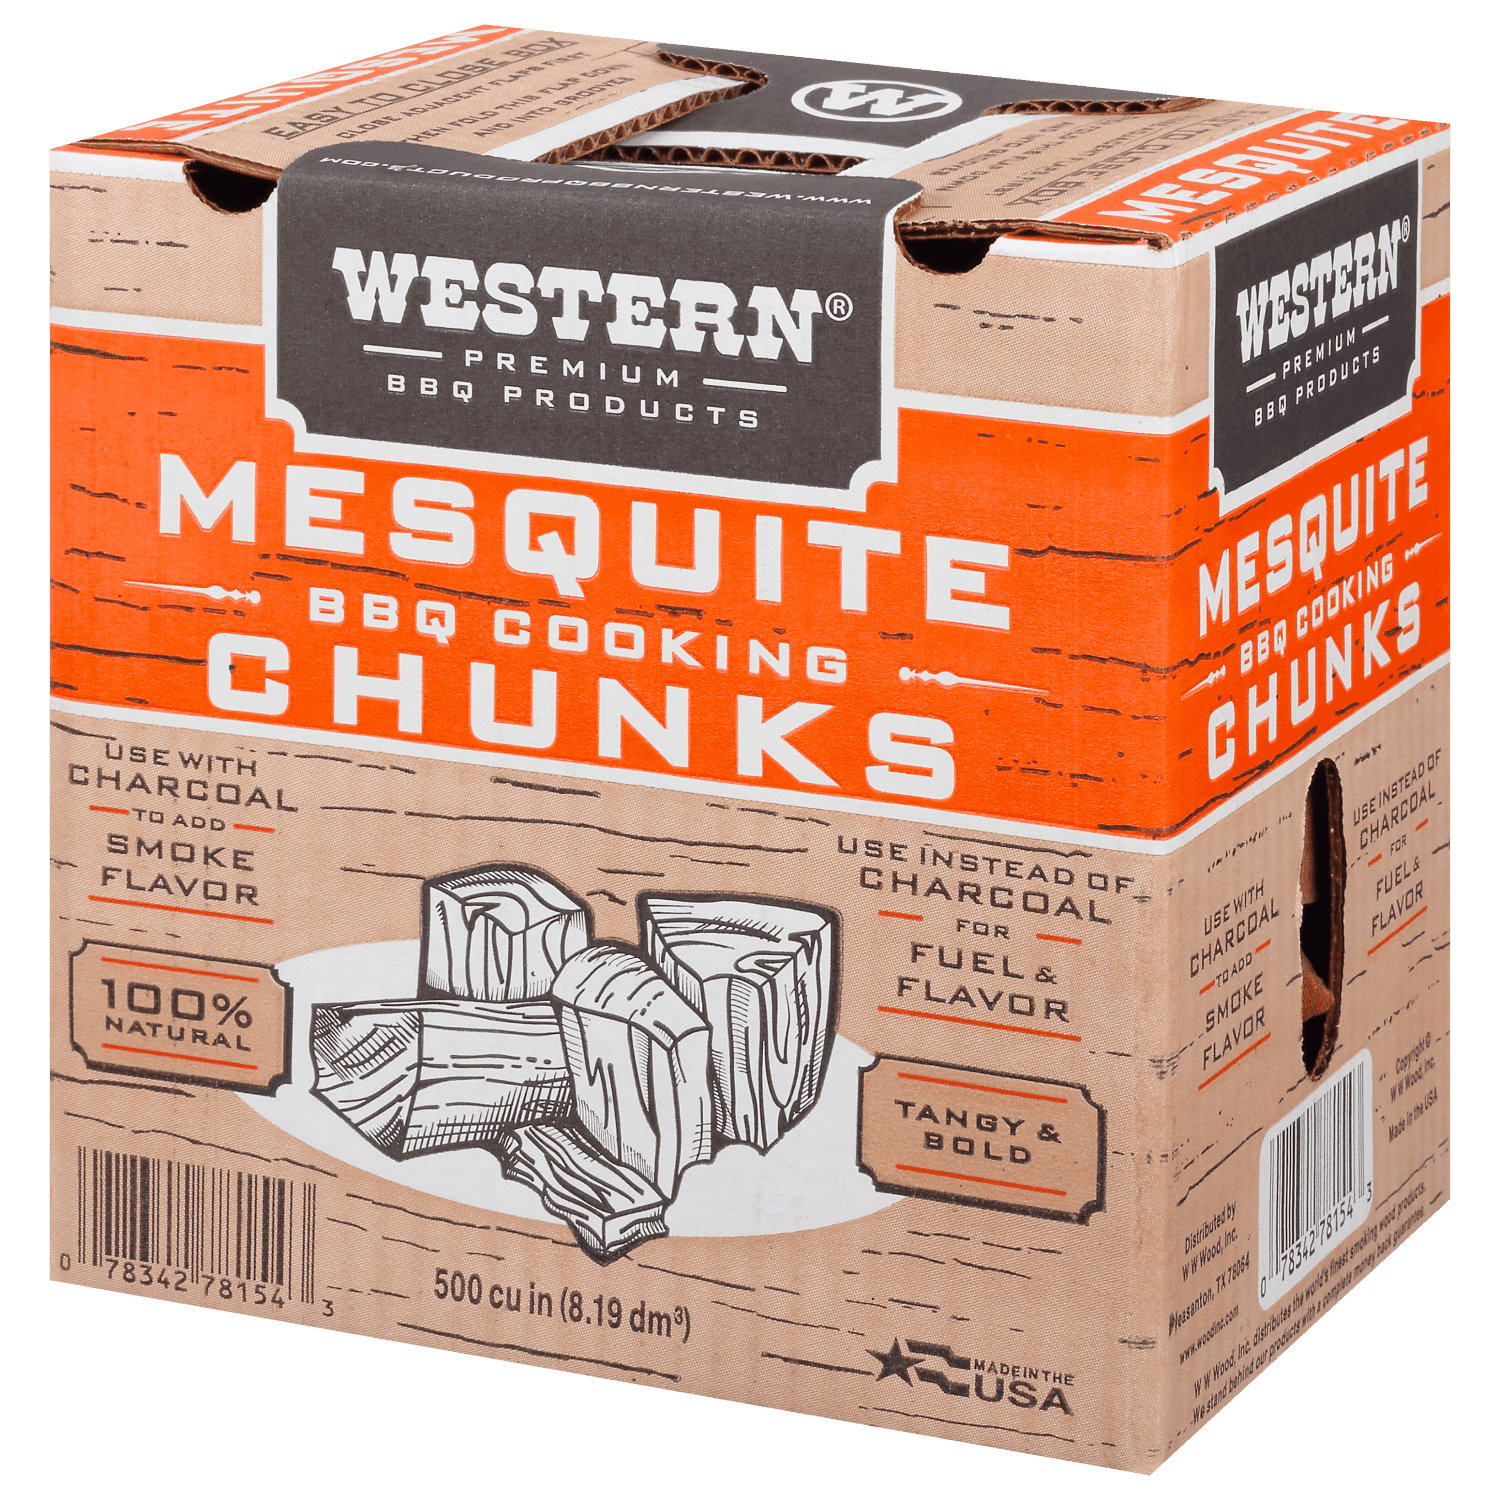 Mesquite Smoking Wood Chunk Box in Western 500 CU in